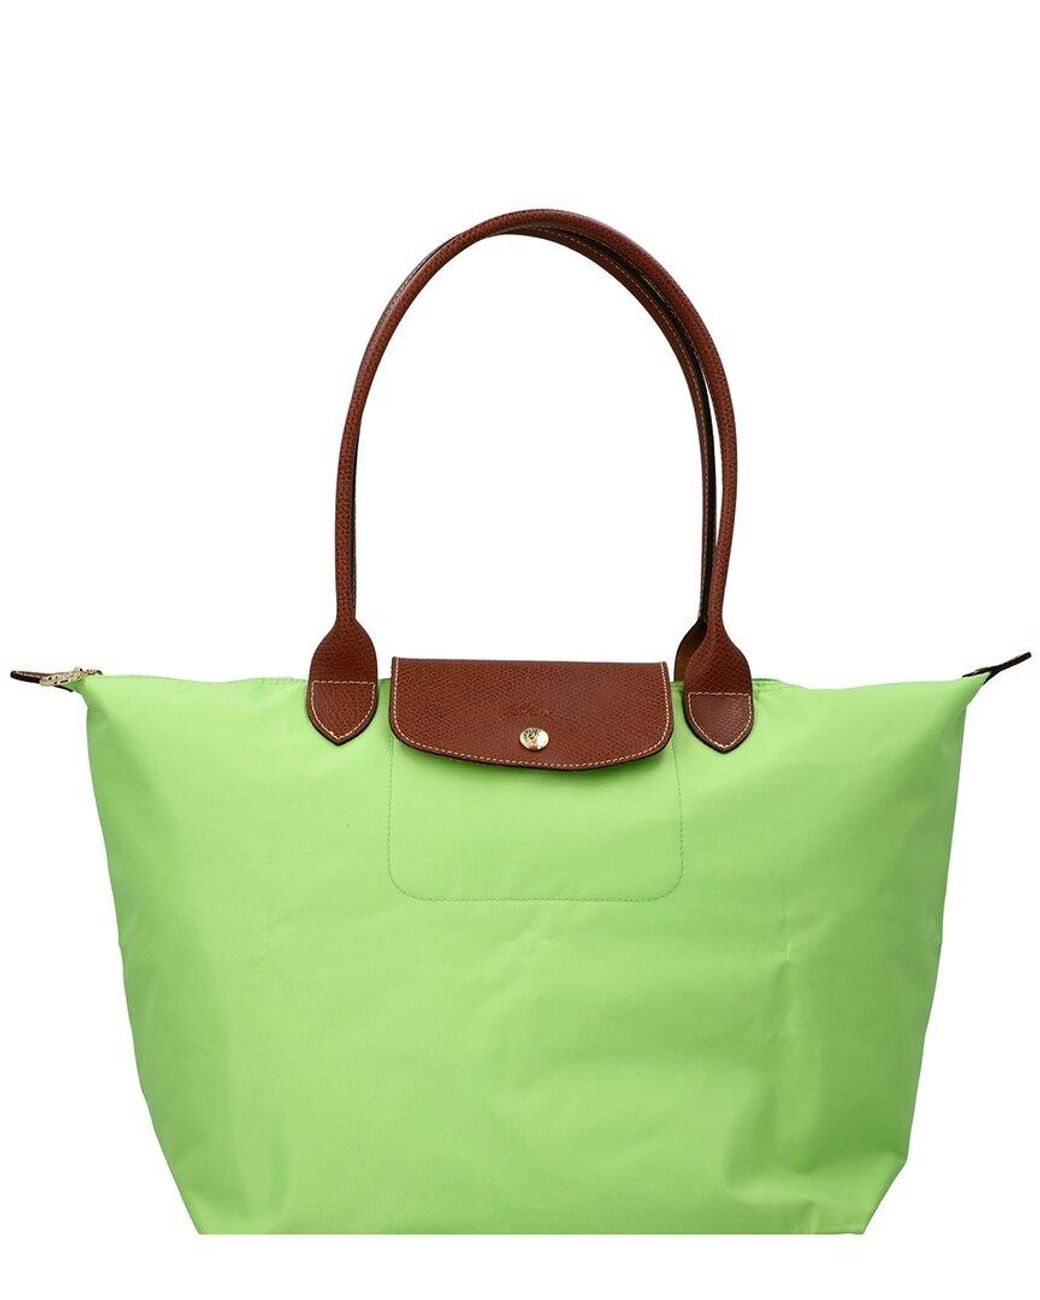 Longchamp Top Handle Bag in Green | Lyst Australia